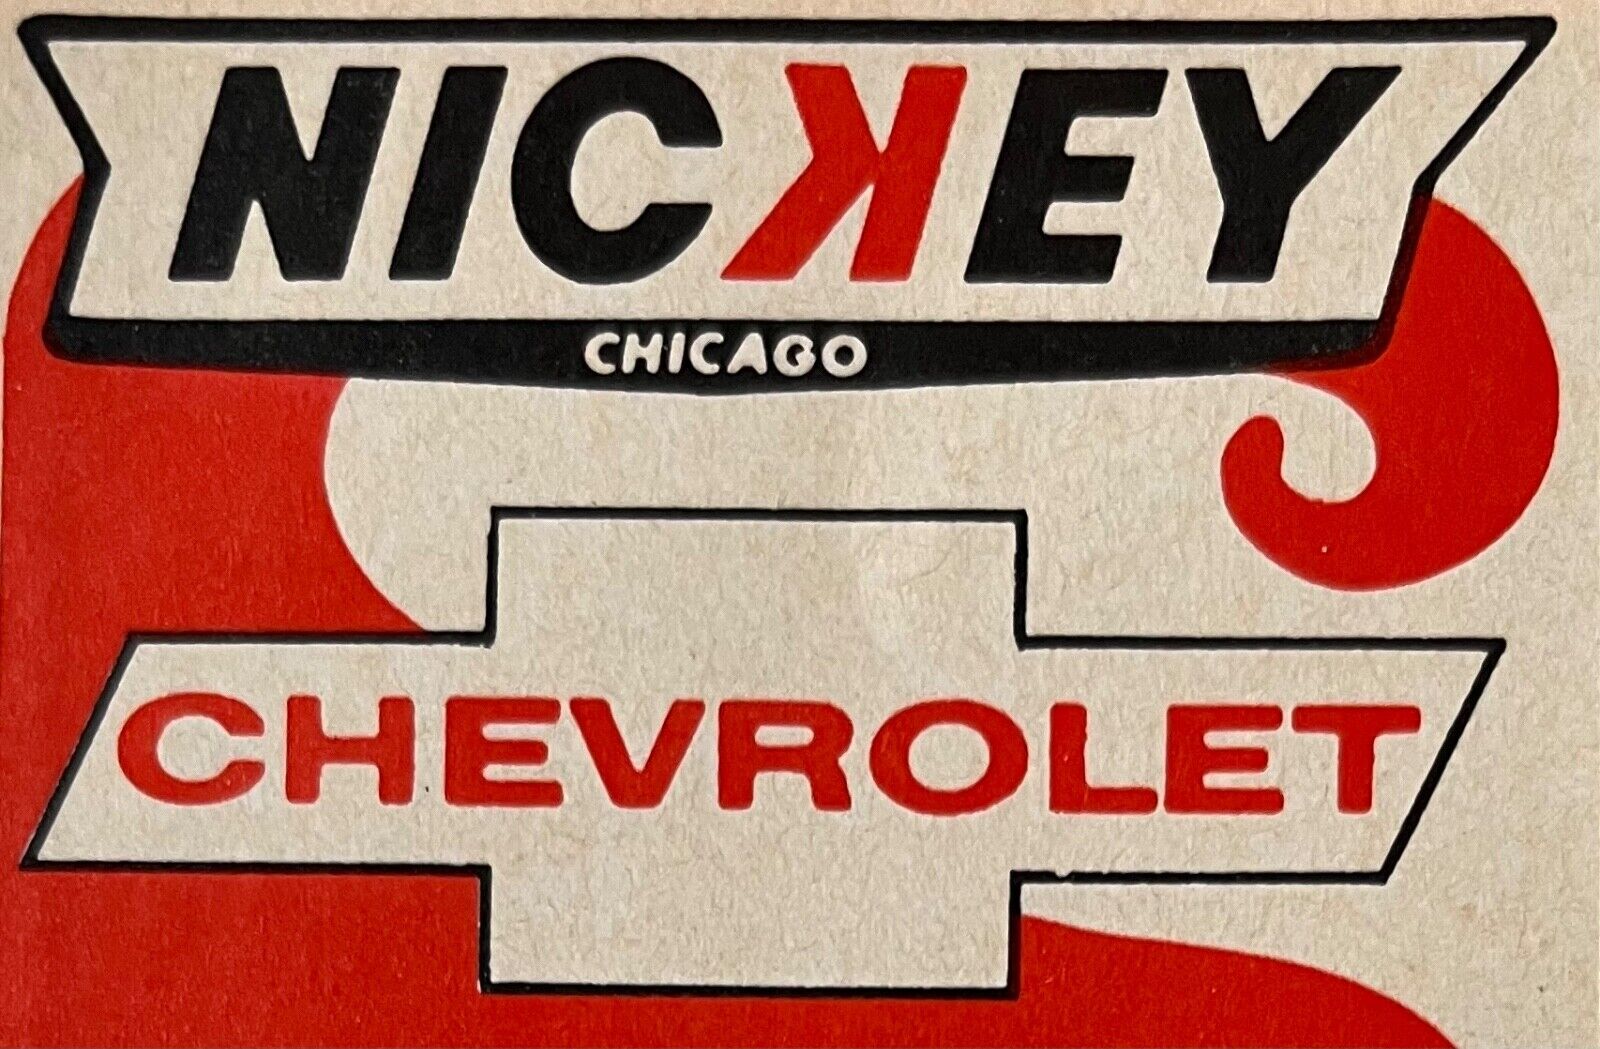 The Legendary “NICKEY” Chevrolet Chicago & Bill Thomas Race Cars Anaheim 60’s